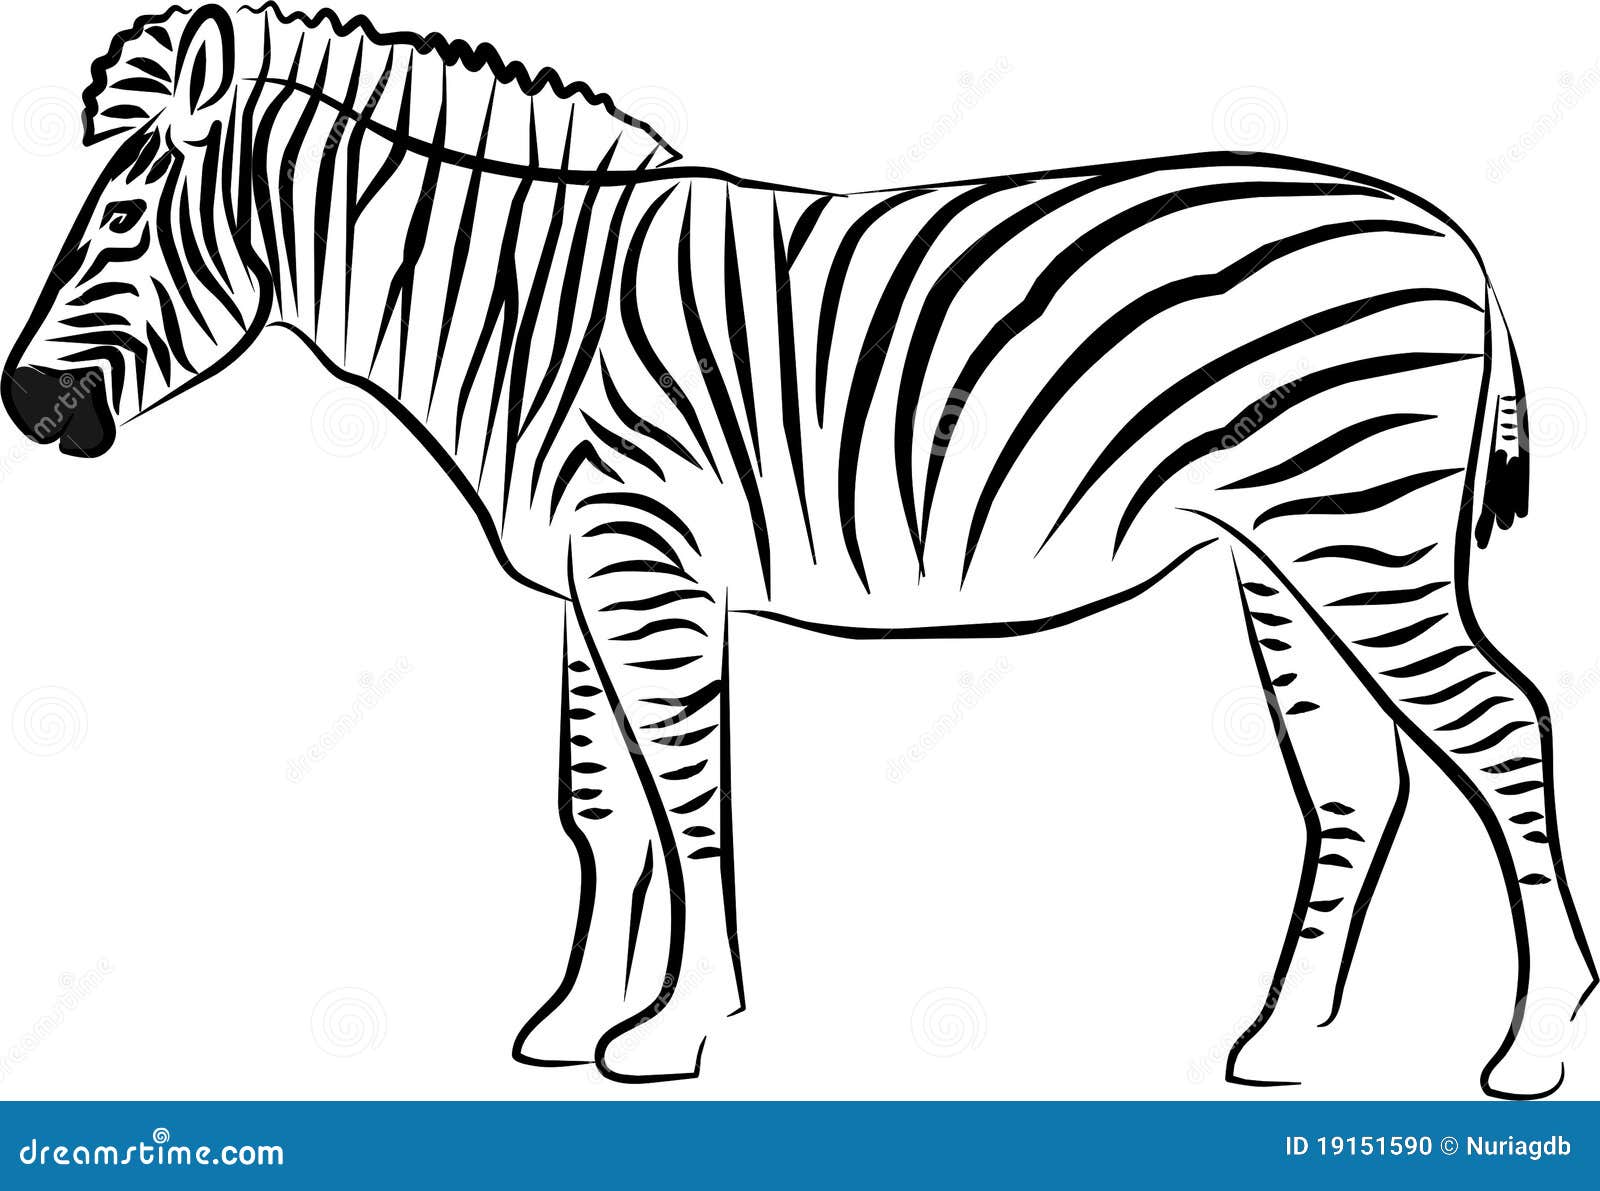 Zebra Herd outline